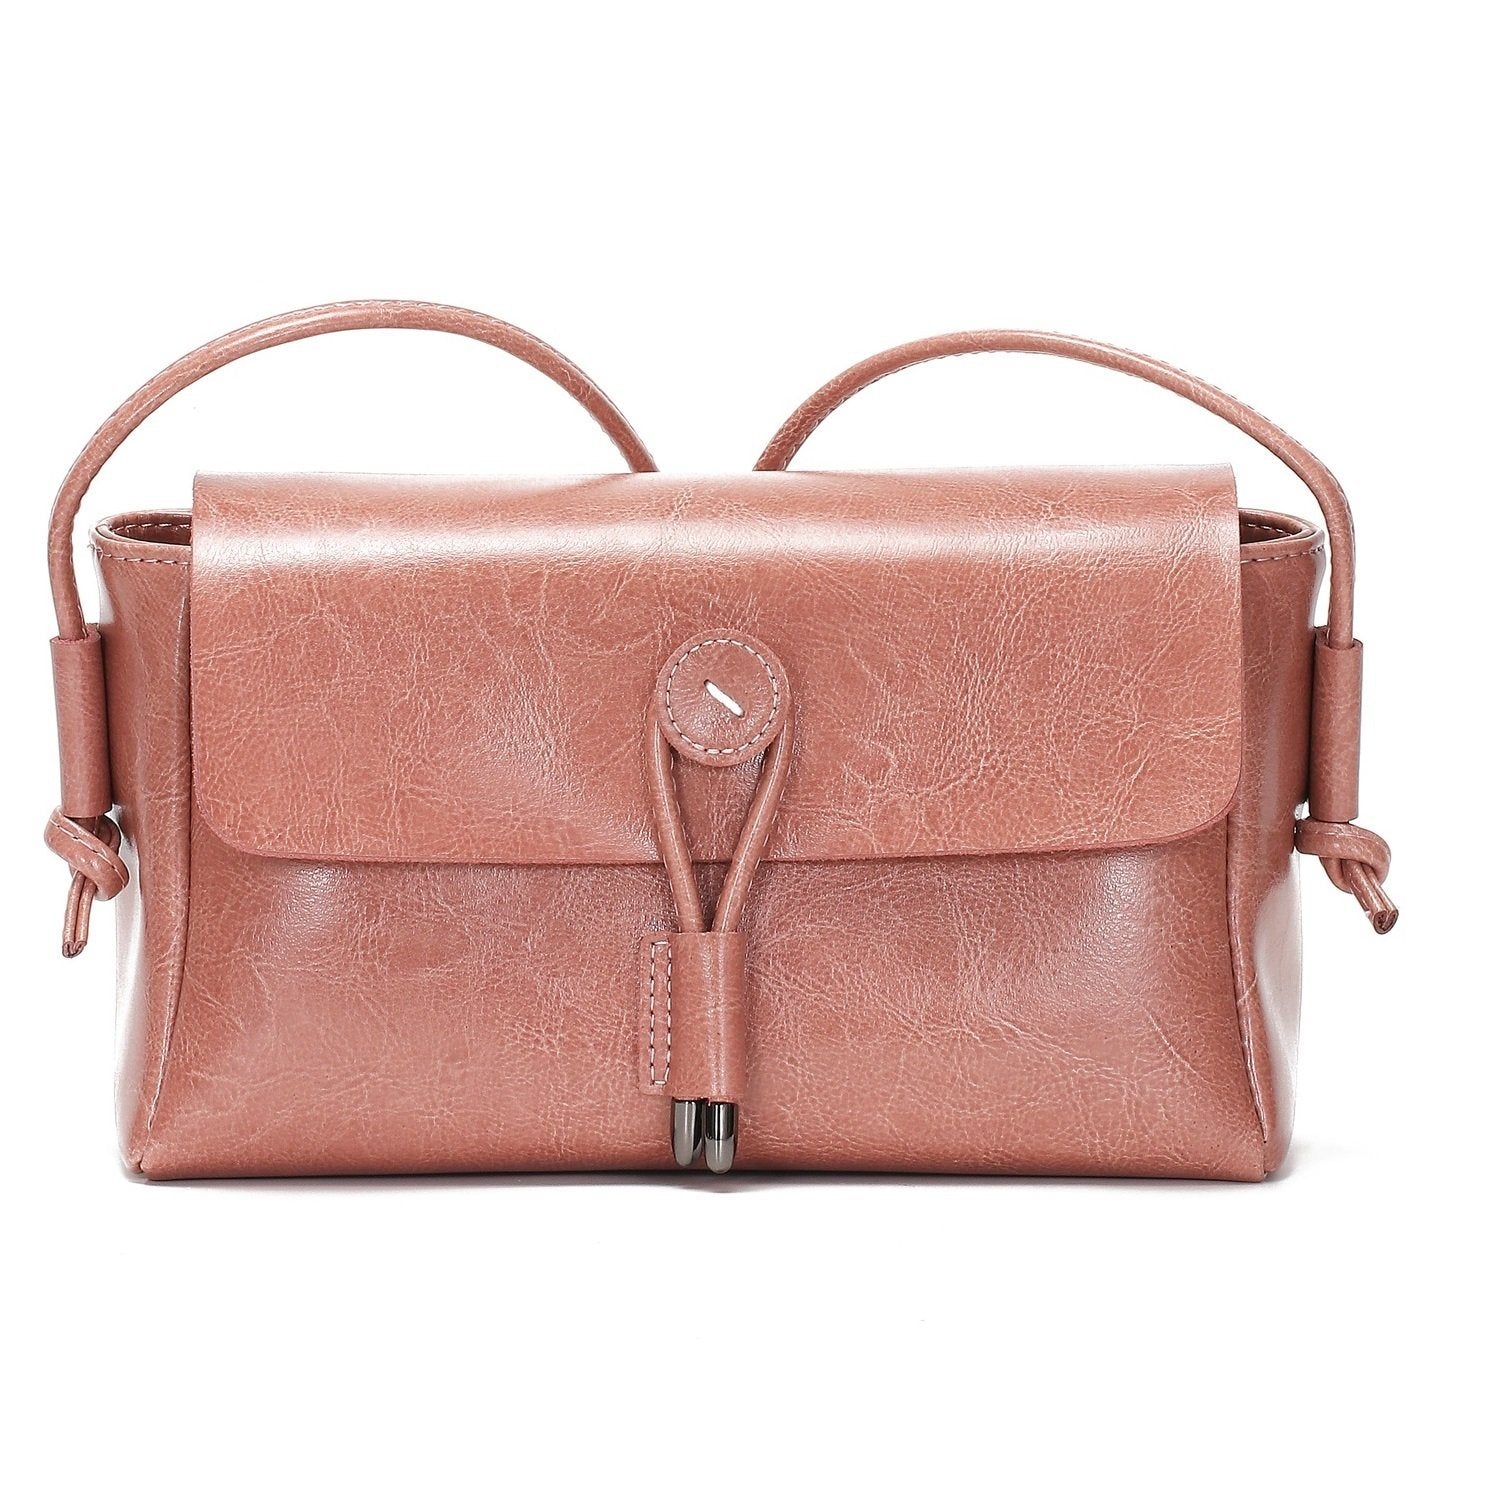 JeHouze Women's Leather Messenger Small Crossbody Handbag Shoulder Purse Handbags & Purses jehouze Pink 